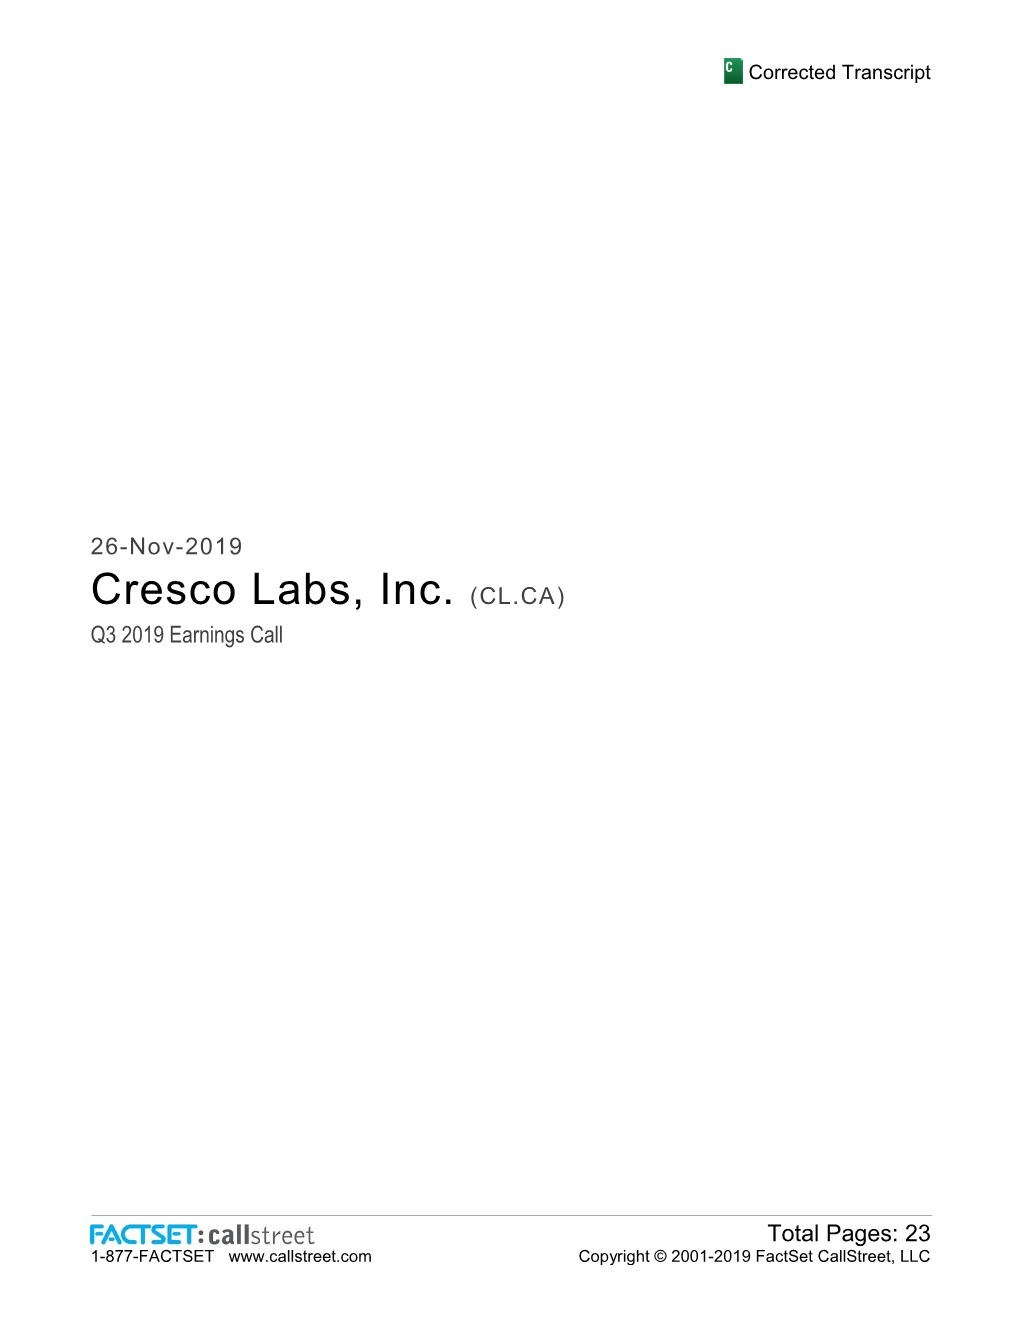 Cresco Labs, Inc. (CL.CA) Q3 2019 Earnings Call